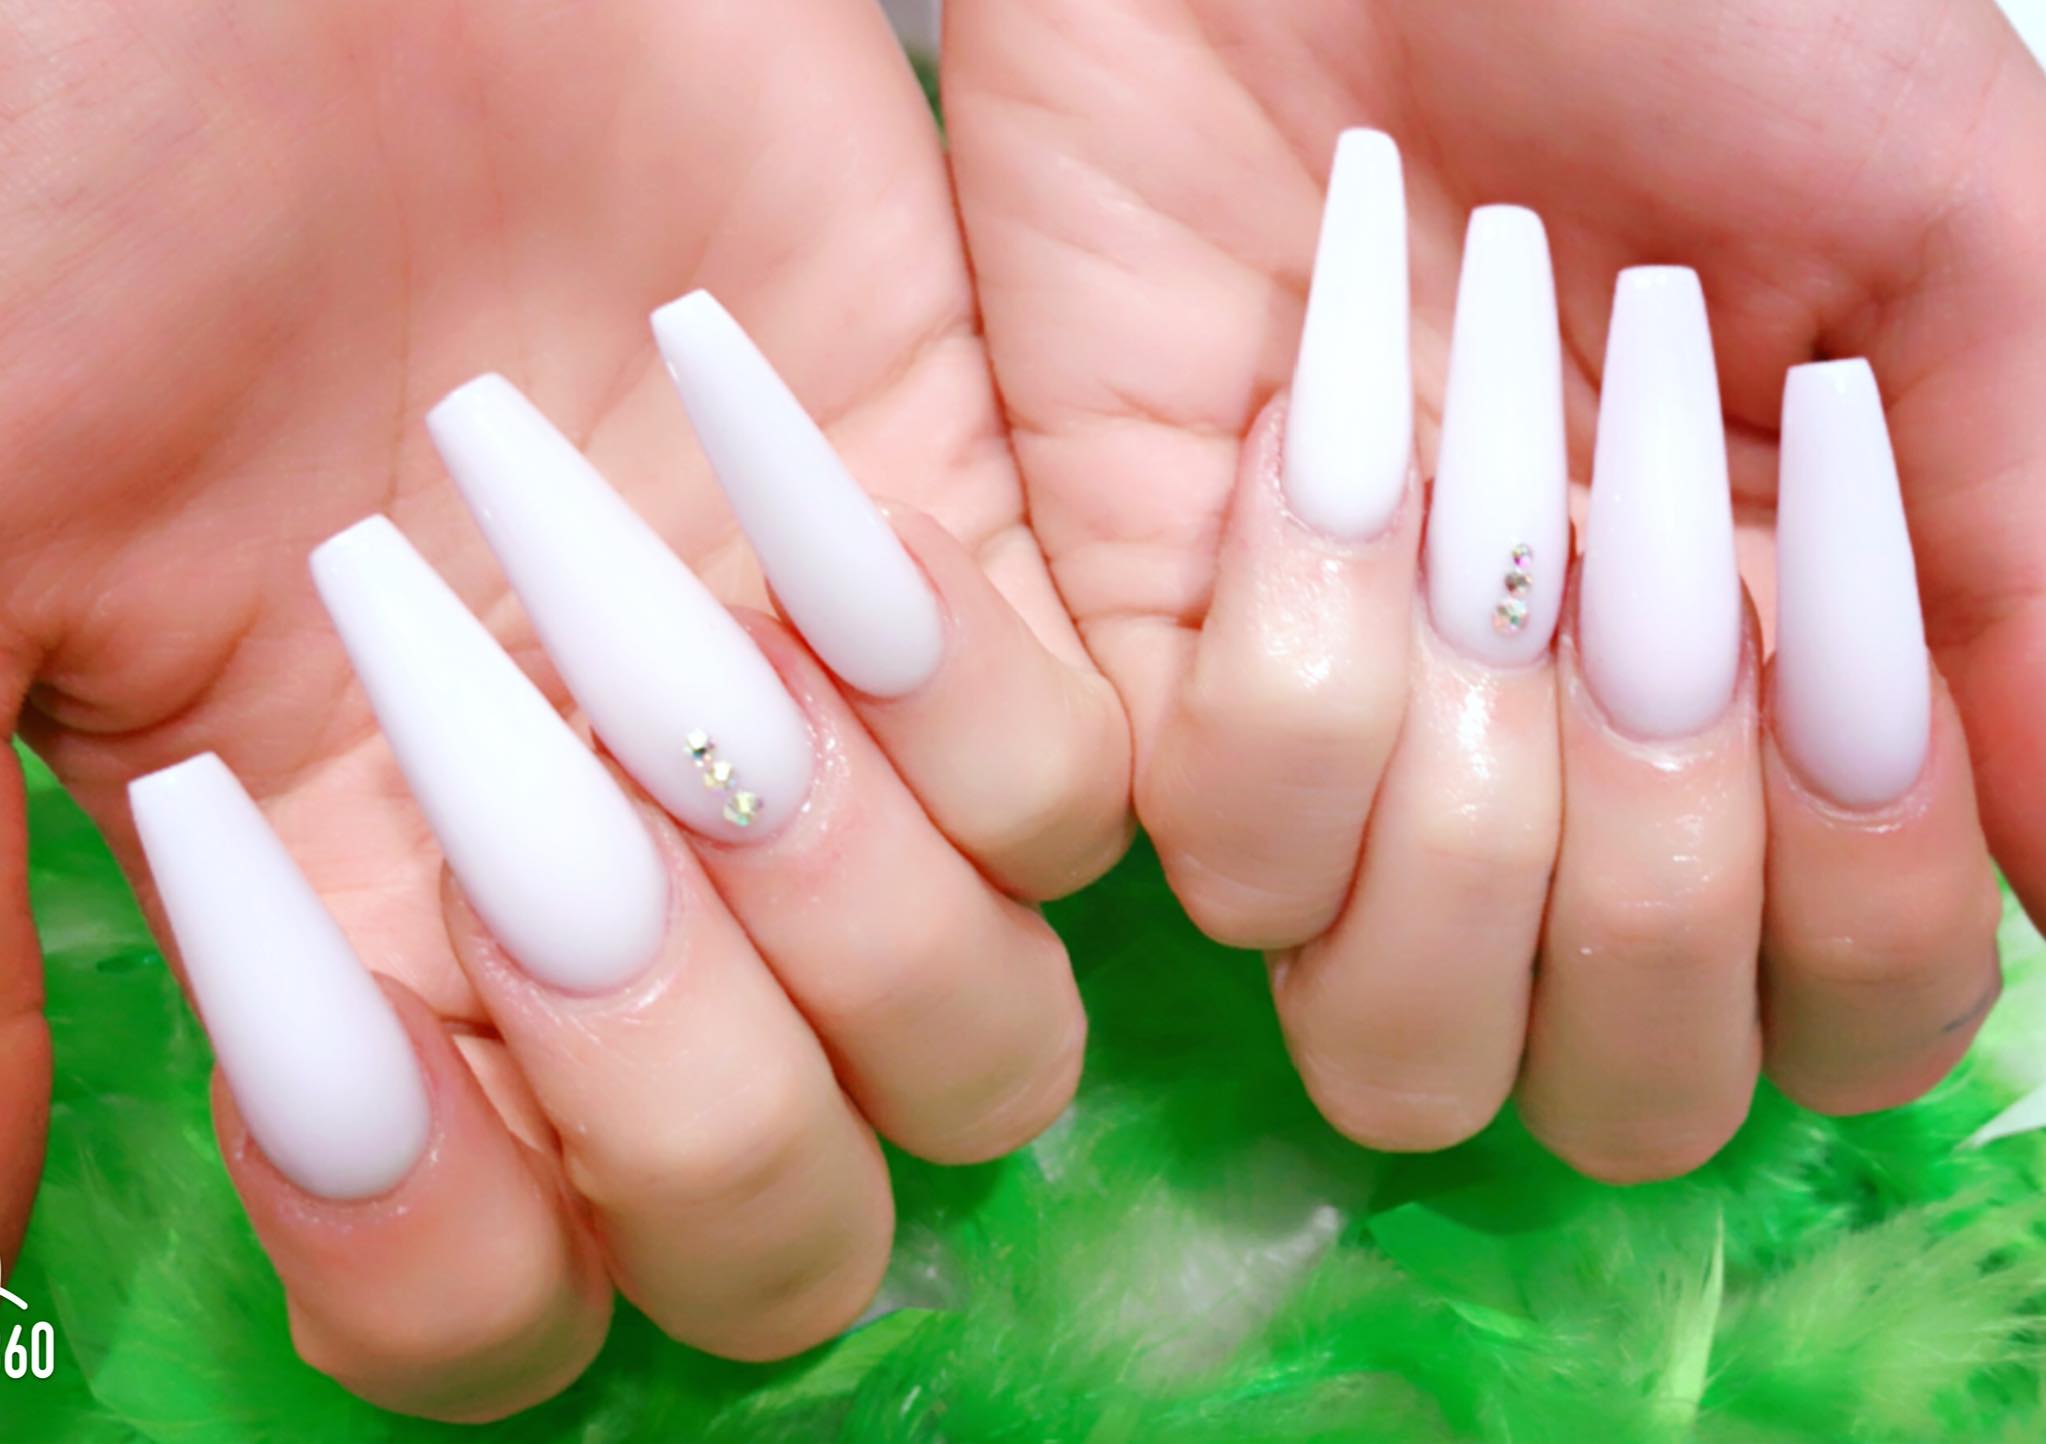 5. "Sage Sophistication" nail polish color - wide 3